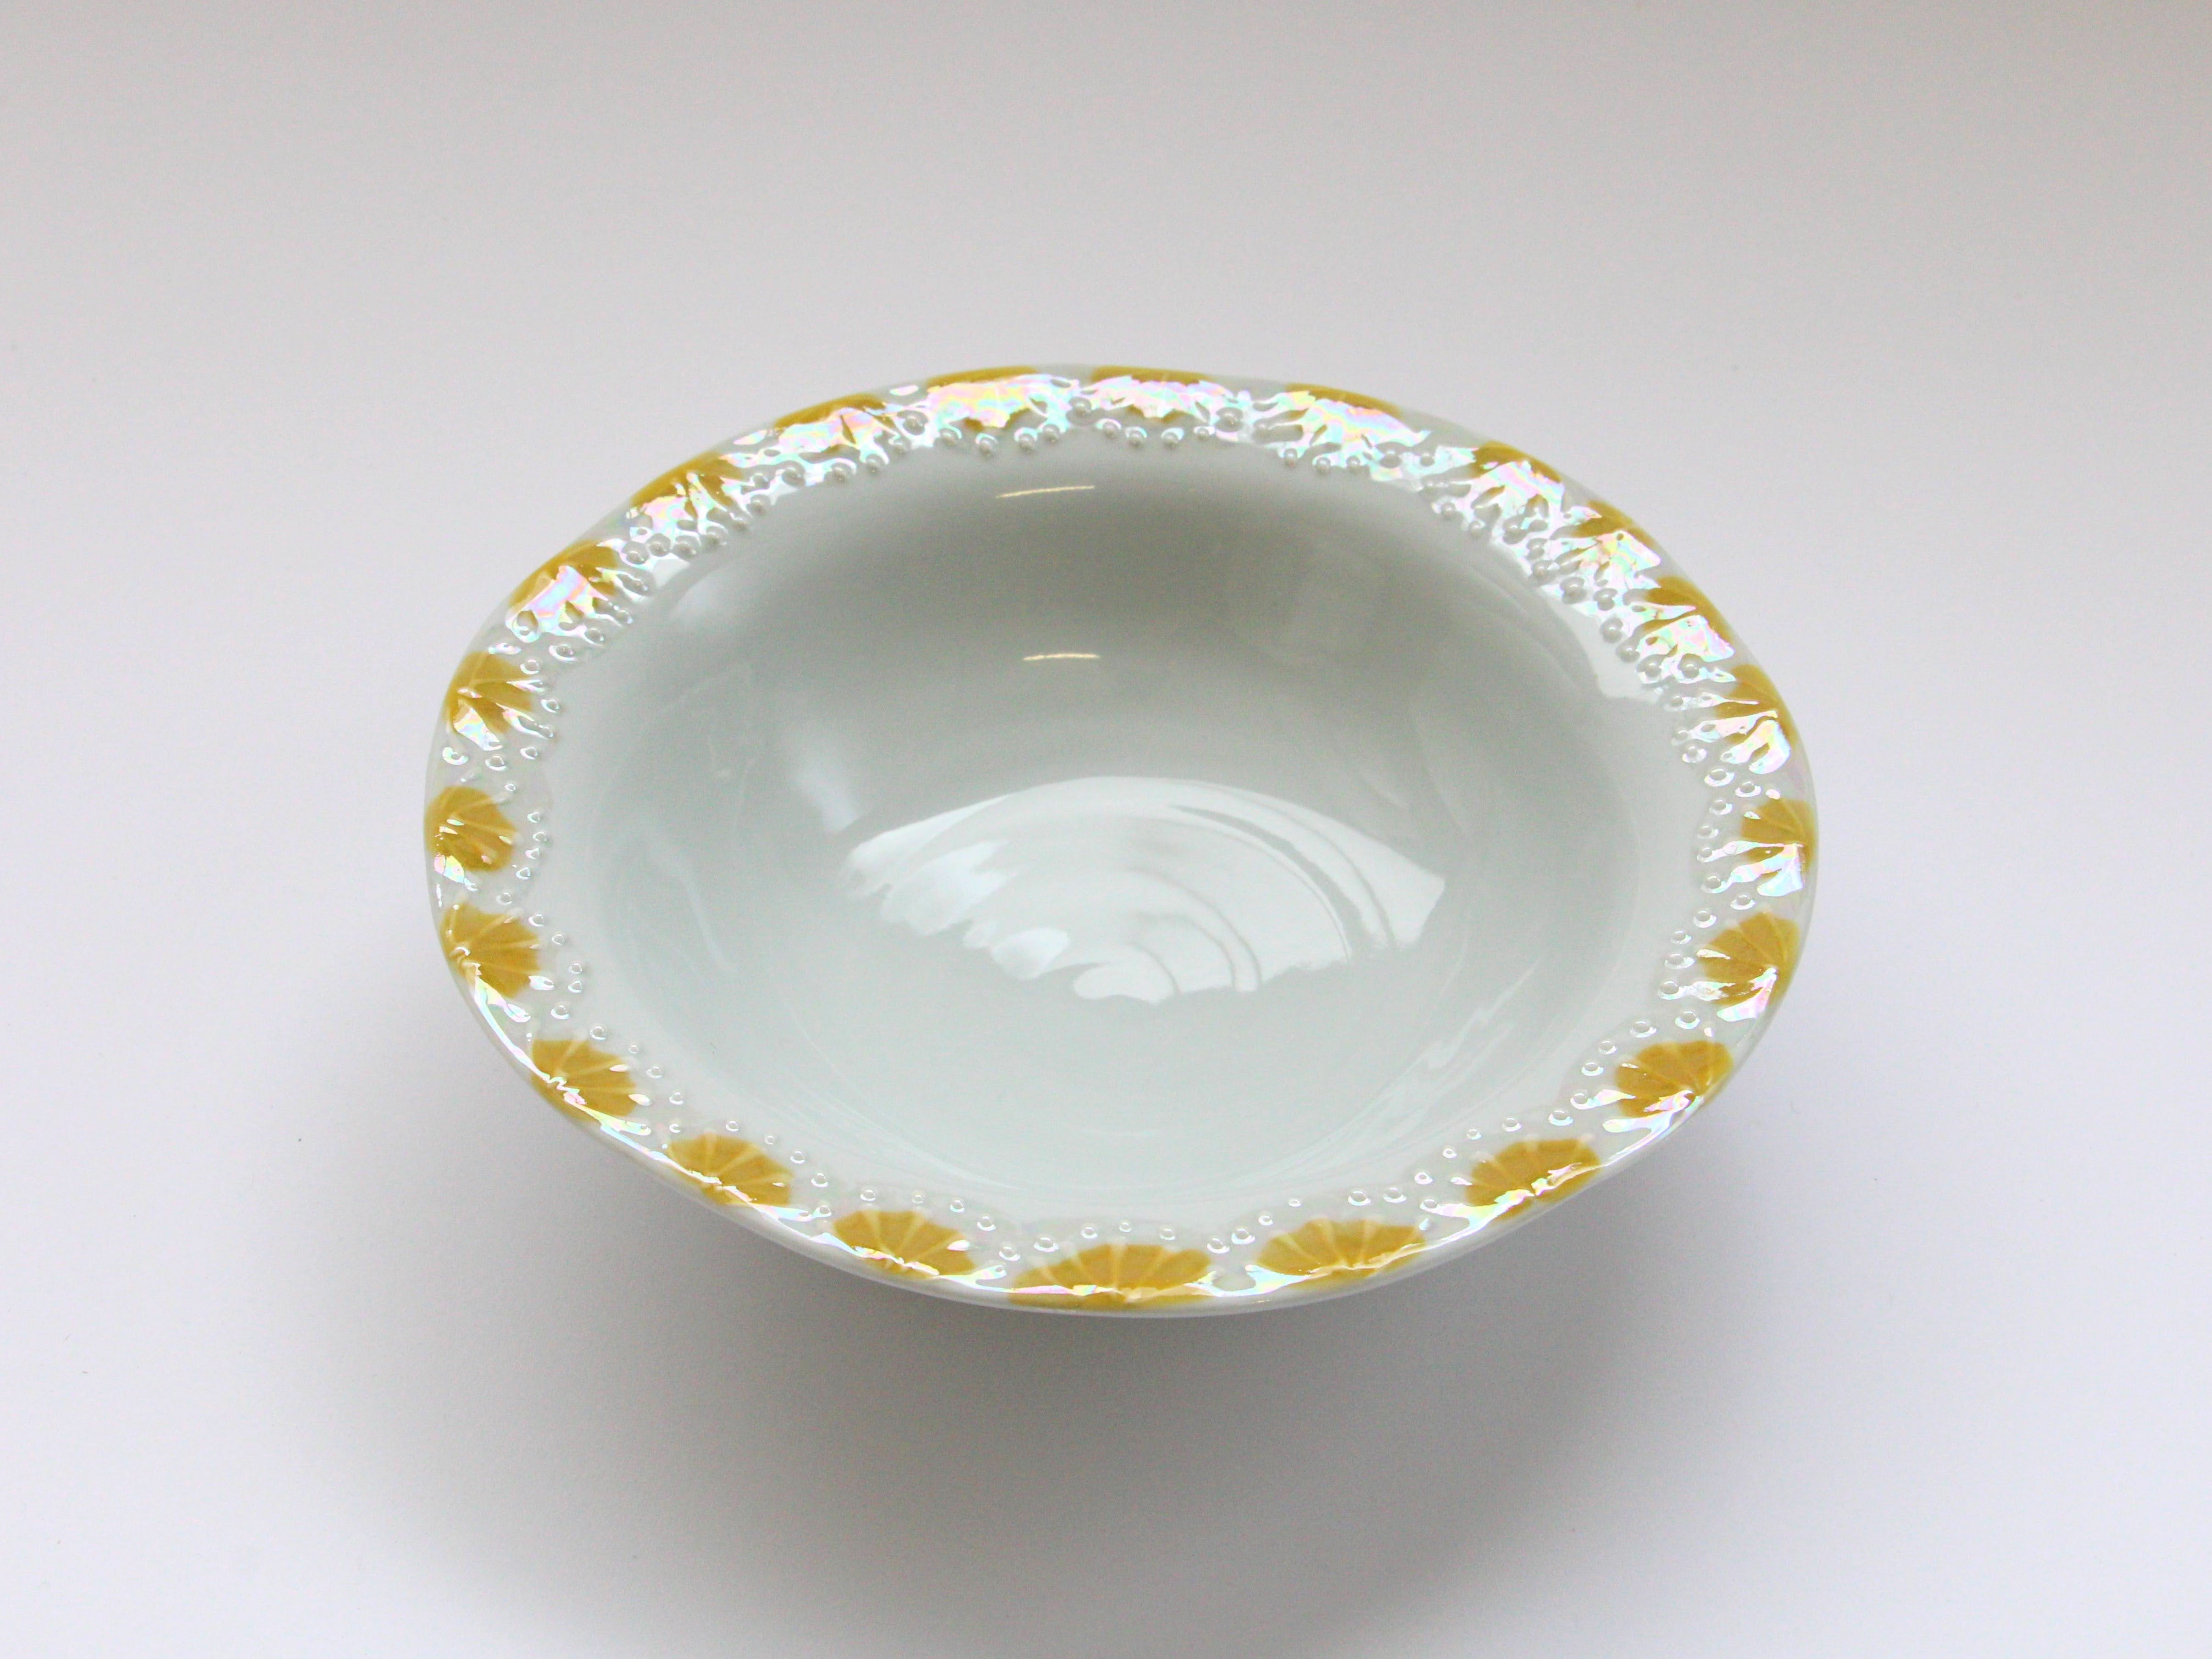 Raster stamen crest rim bowl yellow [Tokushichigama]